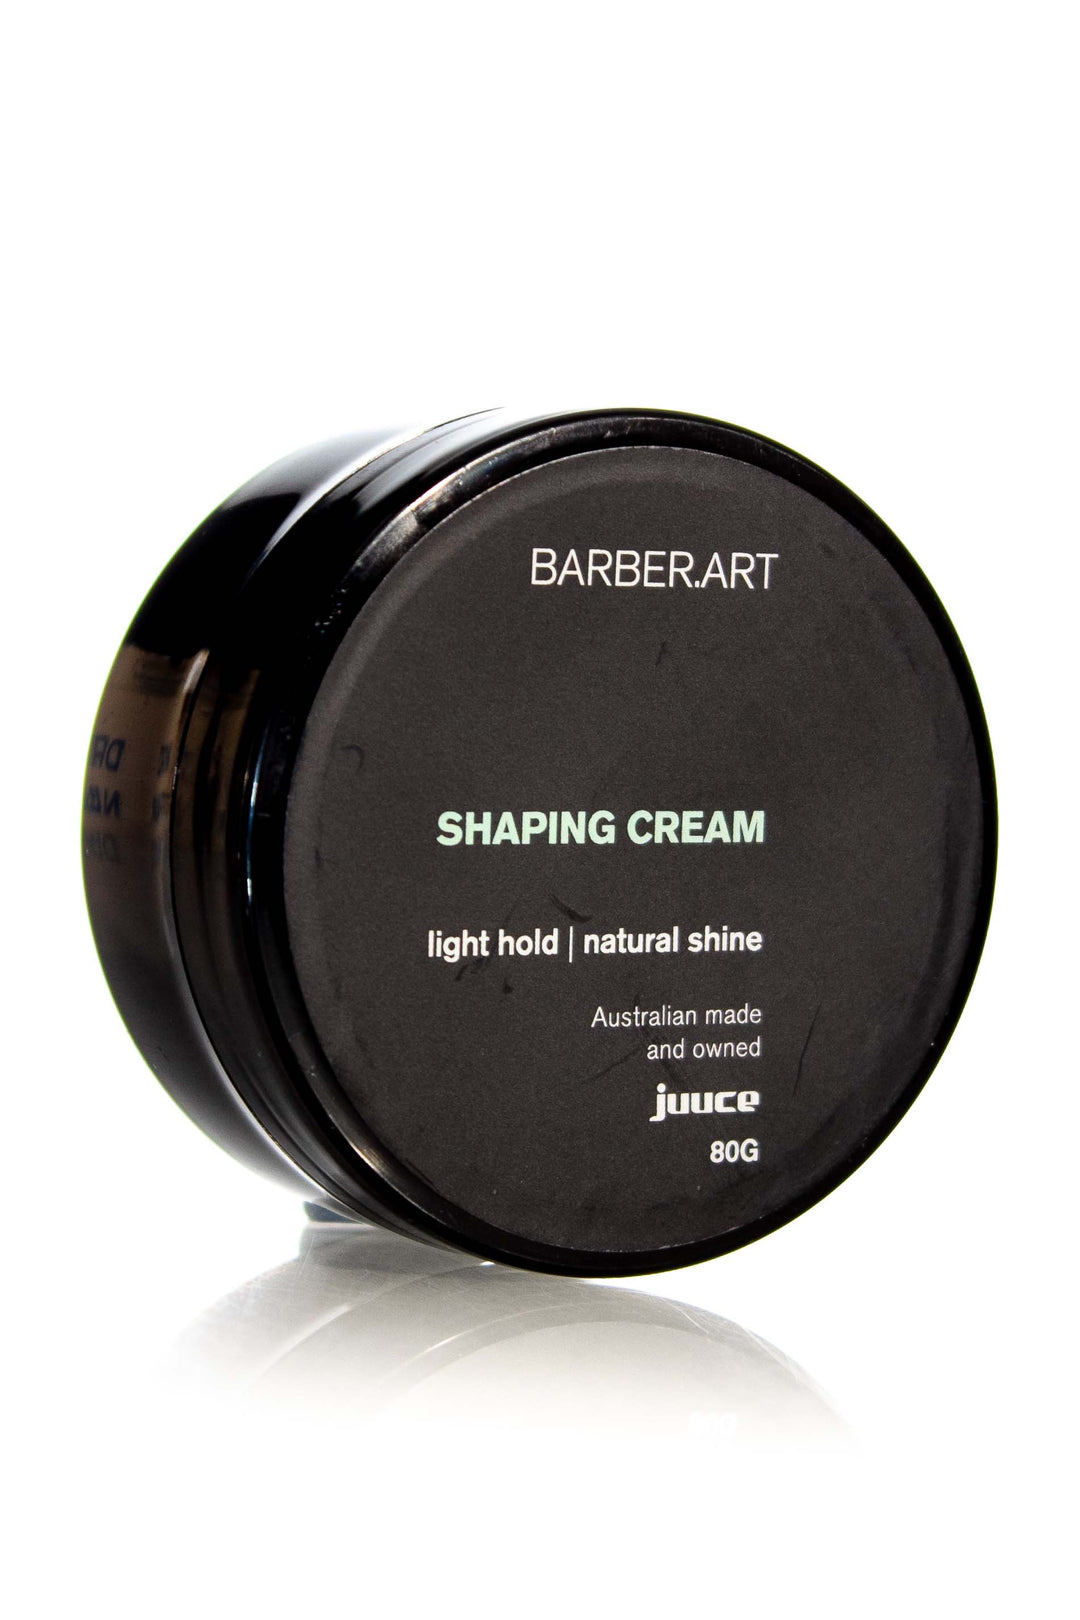 Juuce Barber Art Shaping Cream